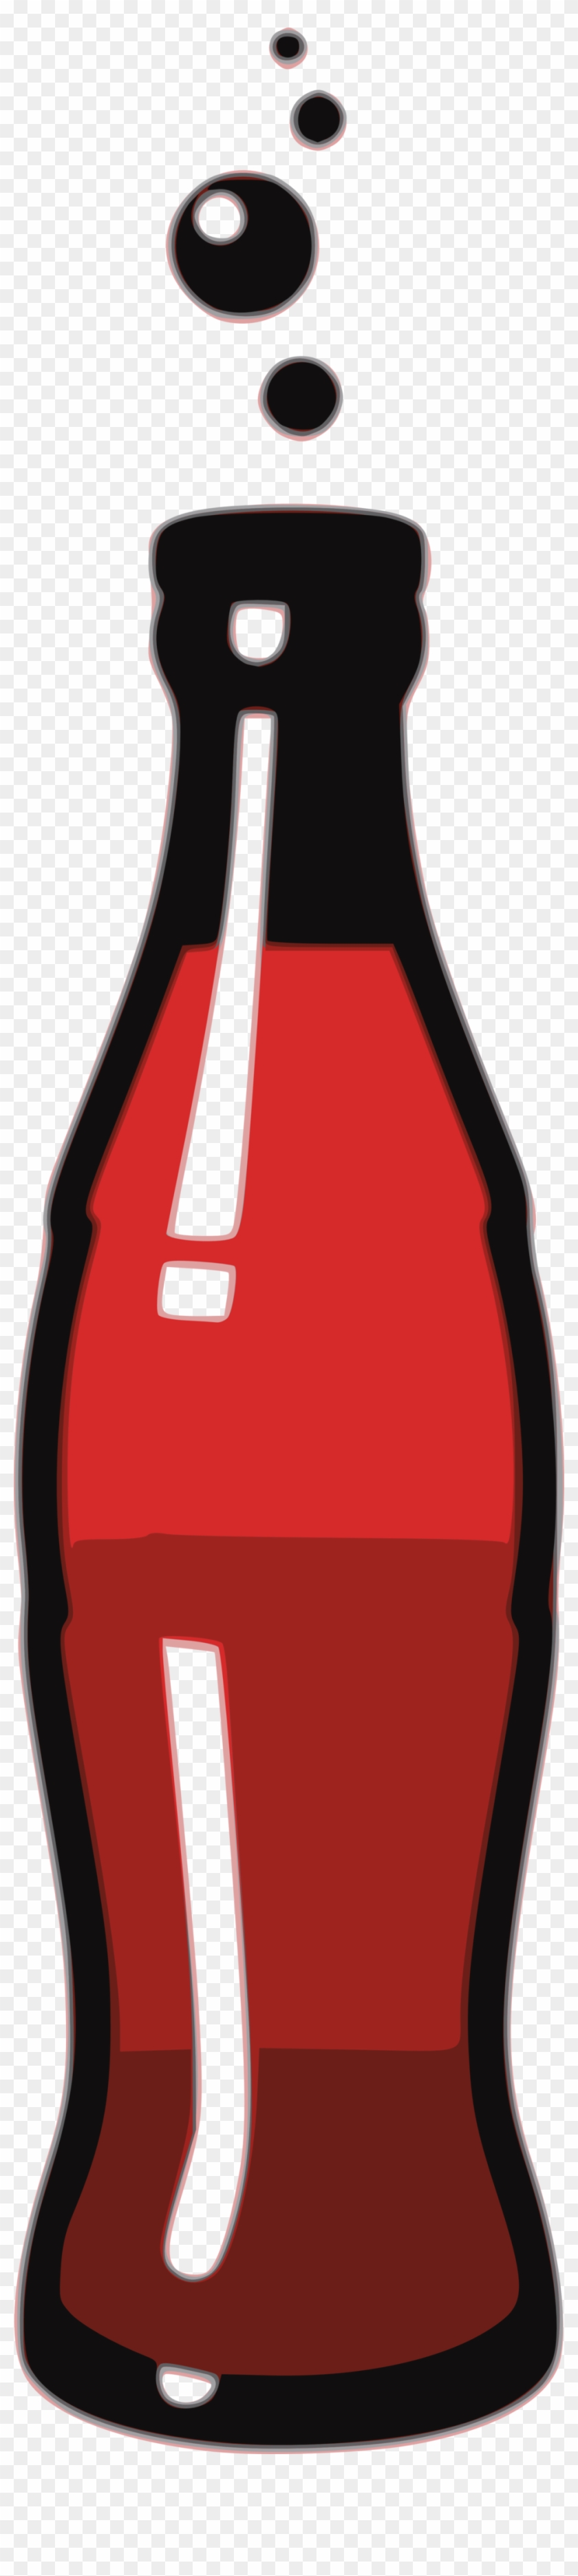 Soda - Soda Bottle Clipart Transparent #11690